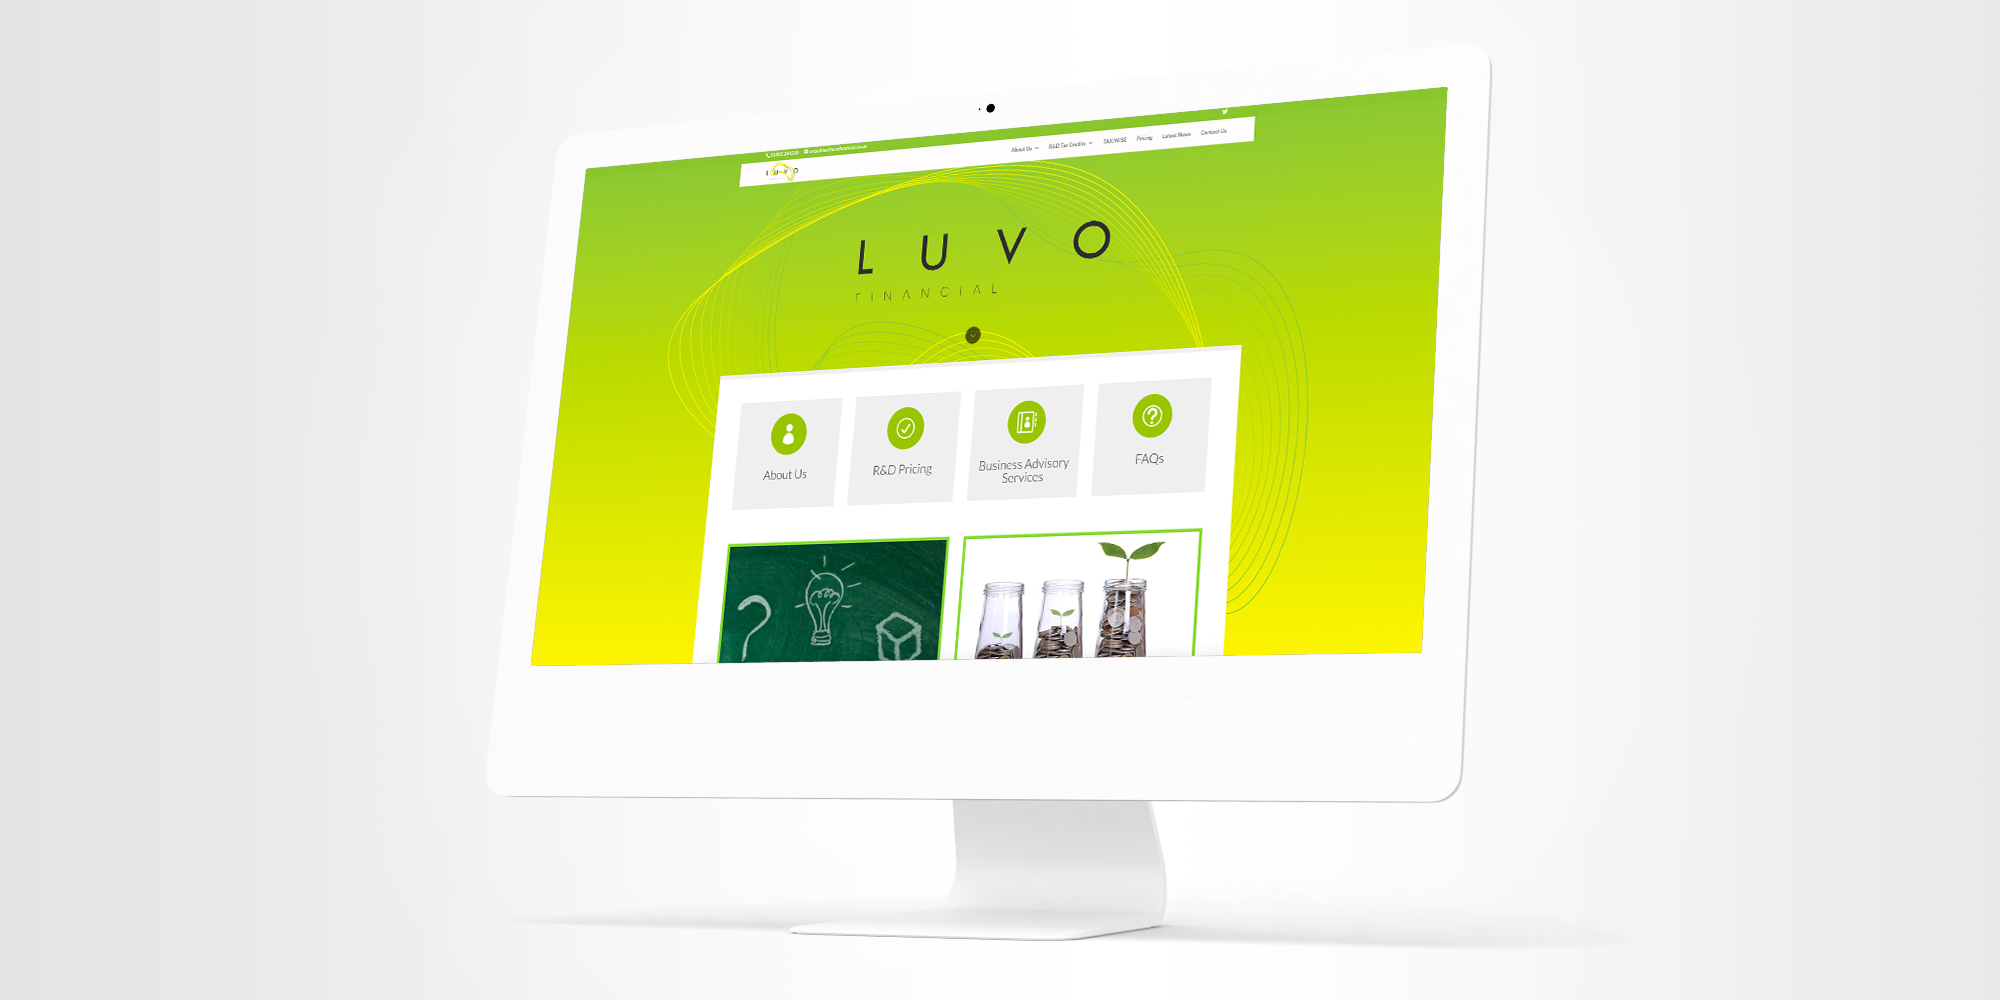 Luvo website image